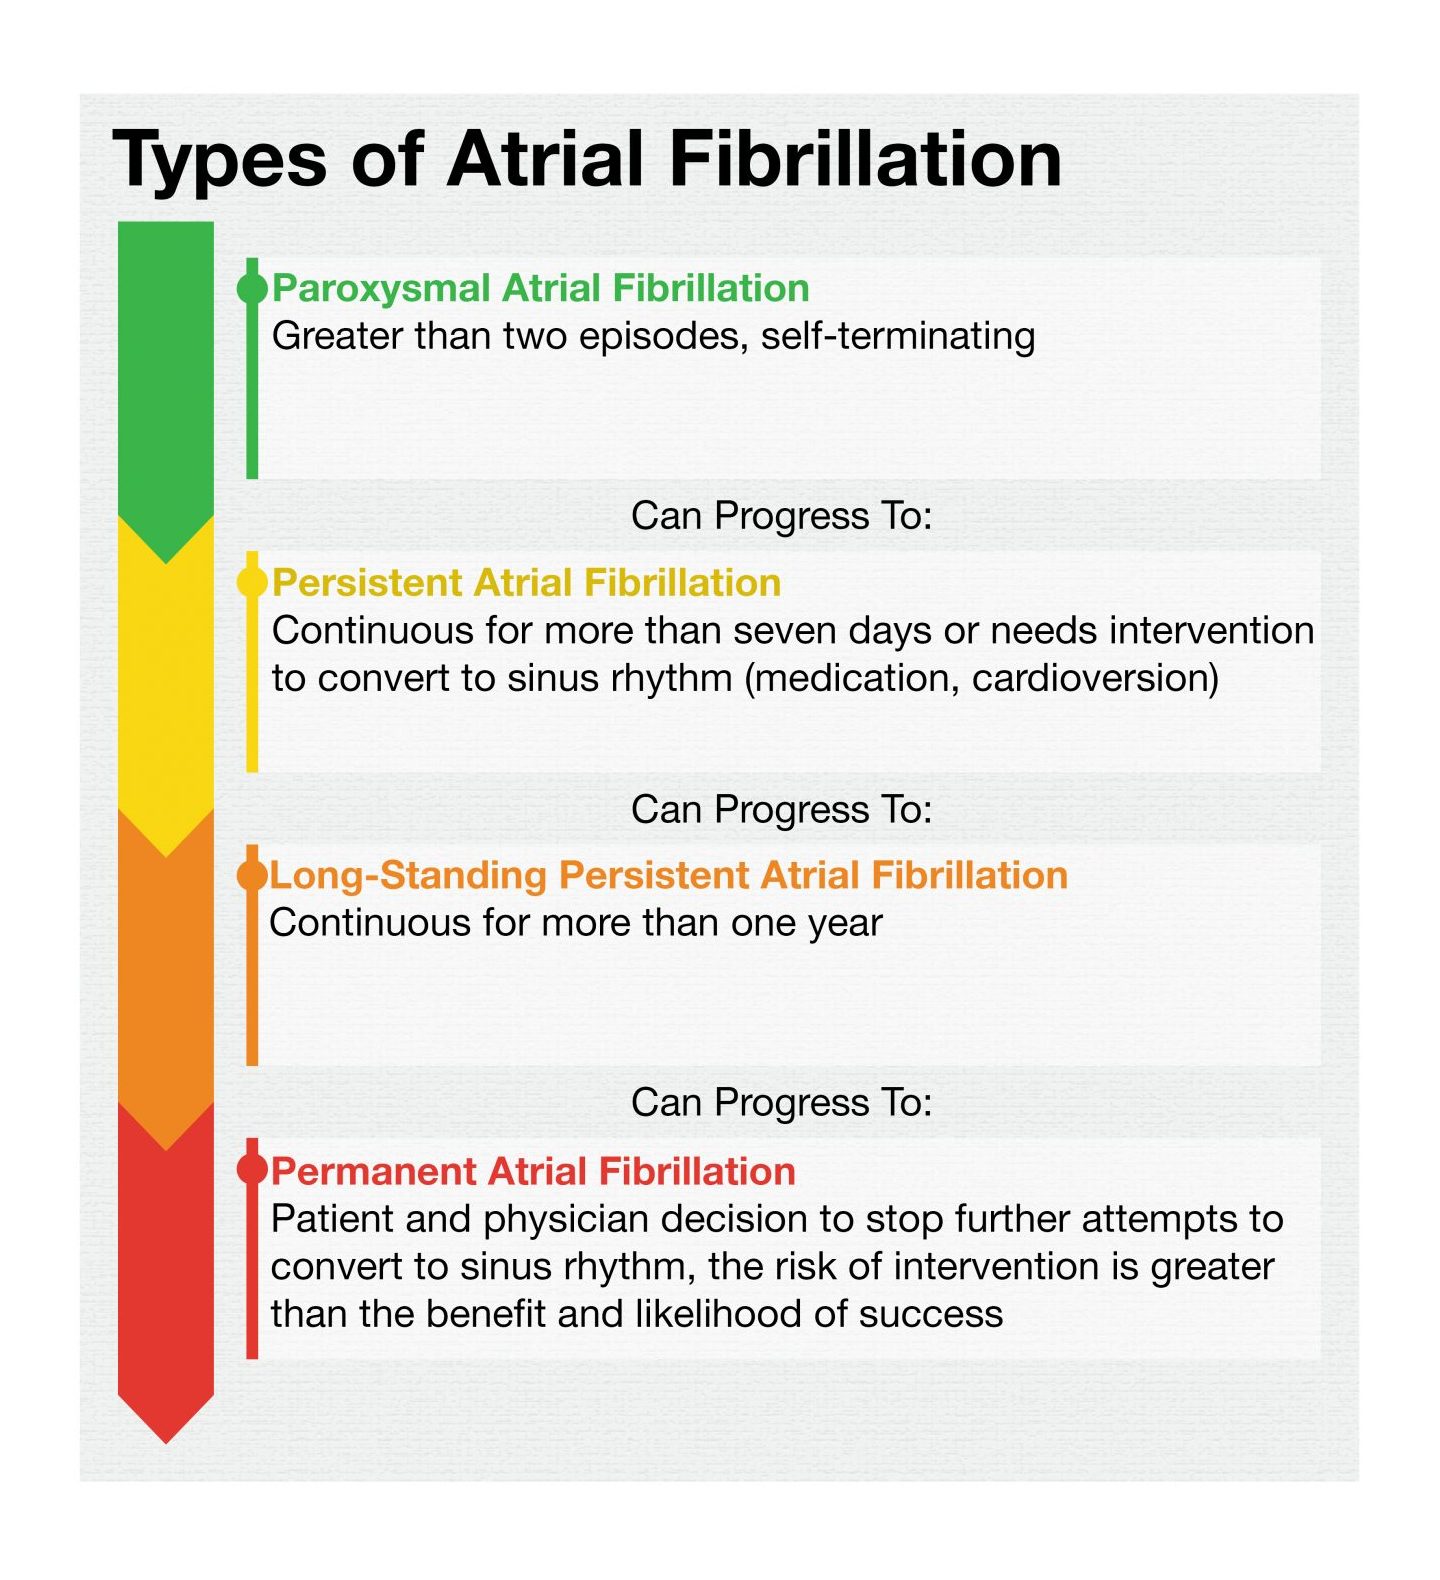 paroxysmal atrial fibrillation